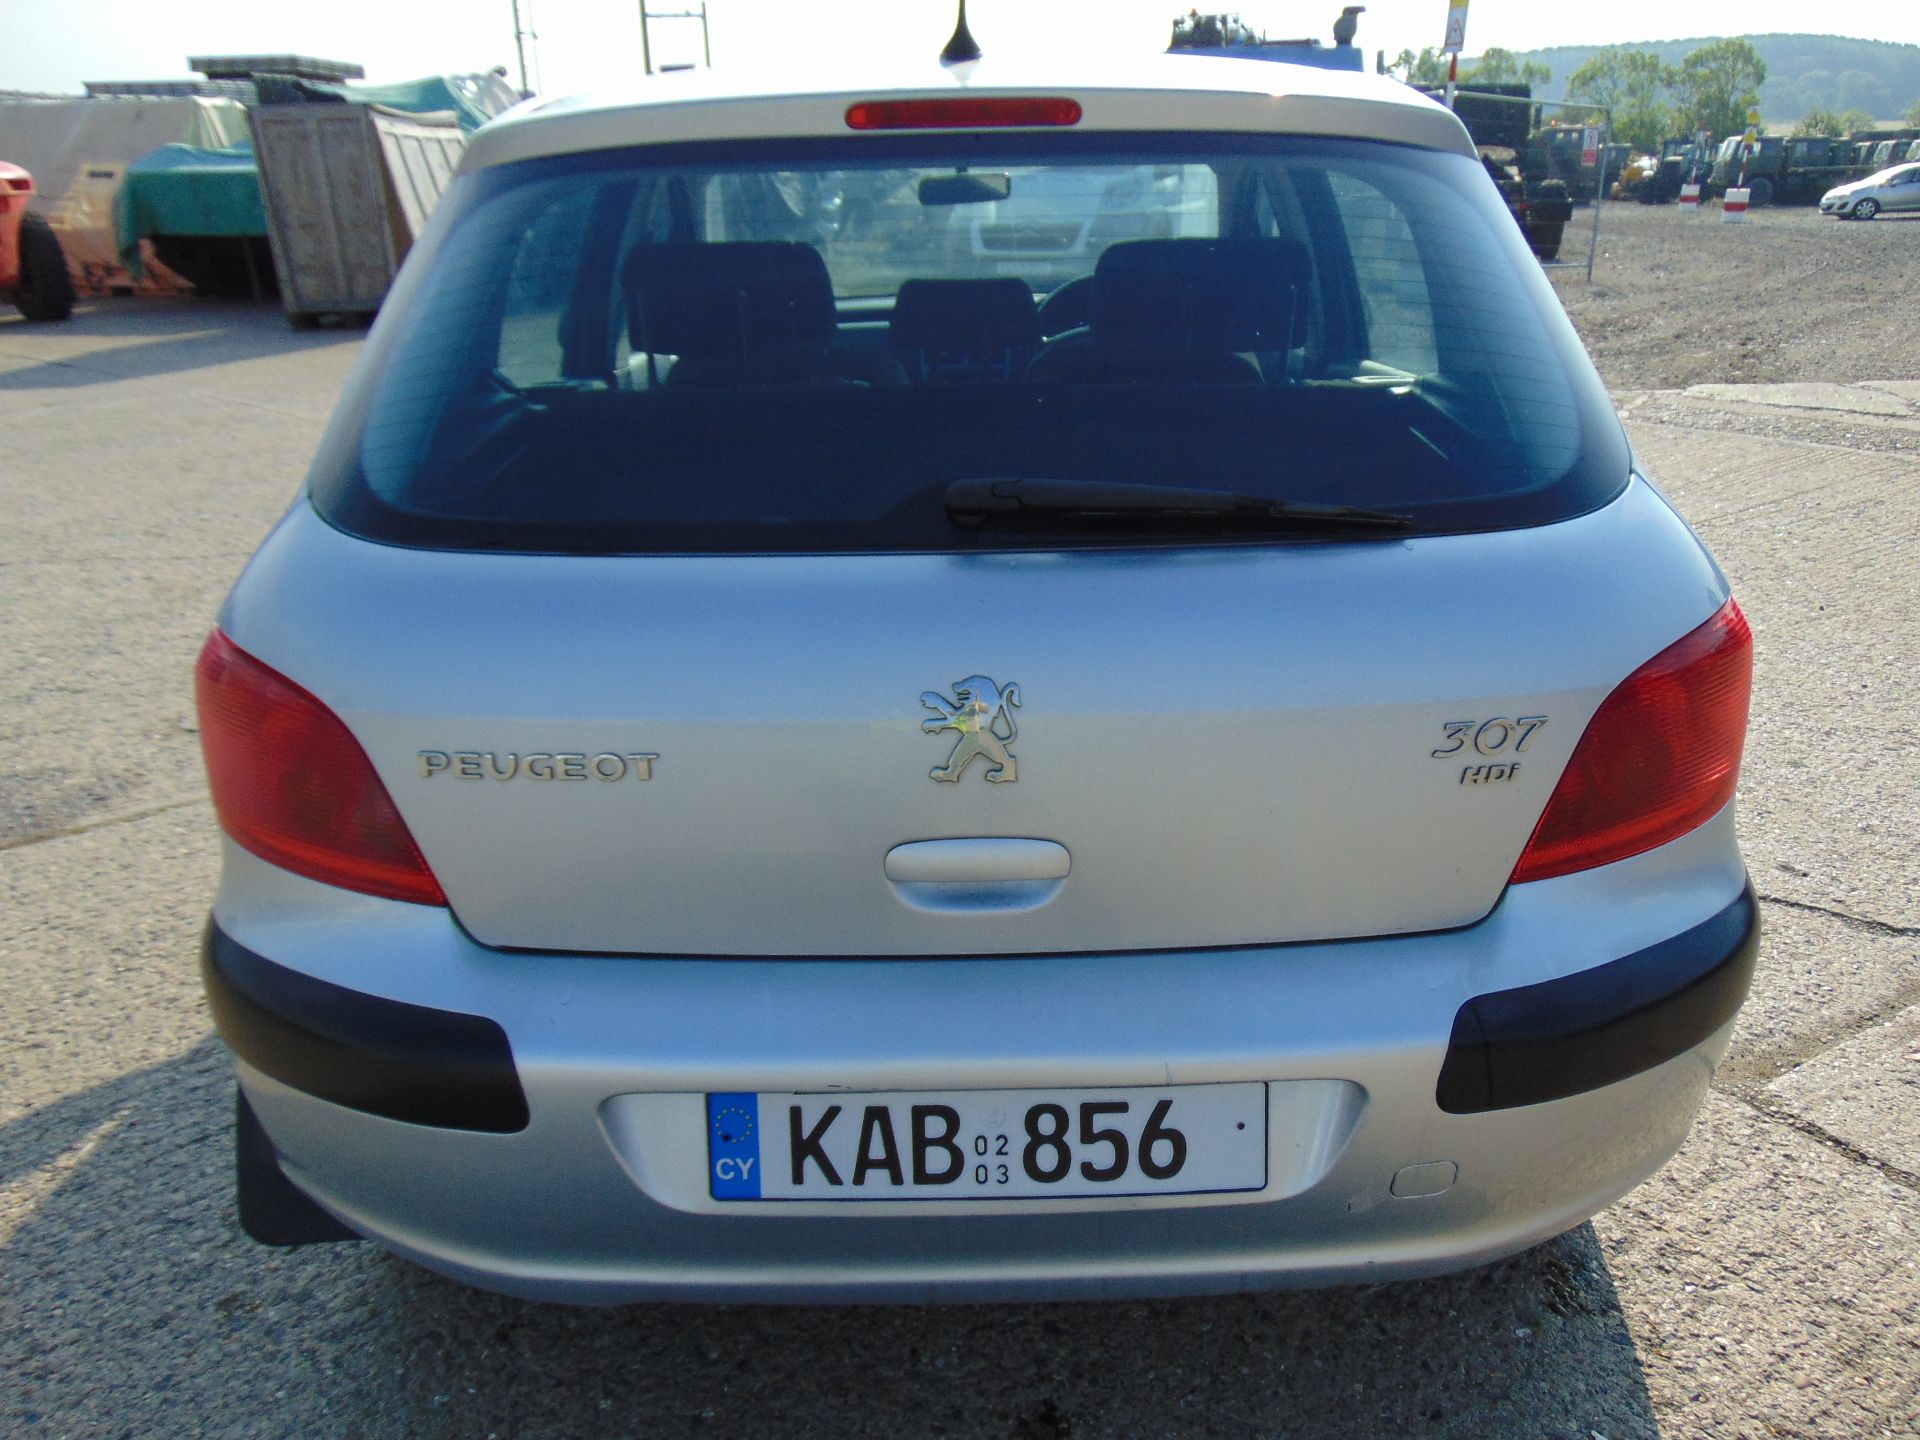 Peugeot 307 2.0 HDi - Image 7 of 17